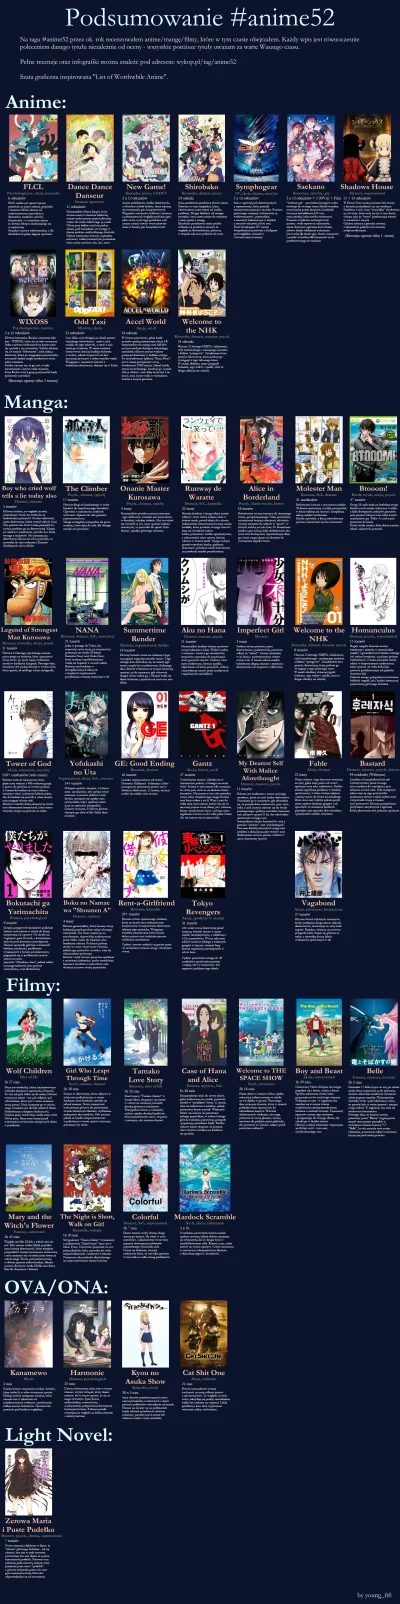 young_fifi - Podsumowanie tagu ---> #anime52
Na tagu recenzowałem 52 anime/mangi/LN,...